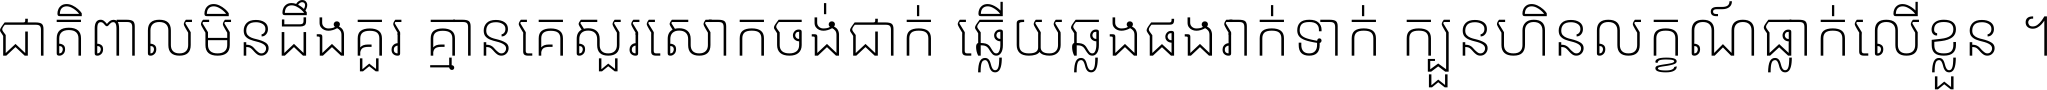 Noto Sans Khmer UI SemiCondensed ExtraLight